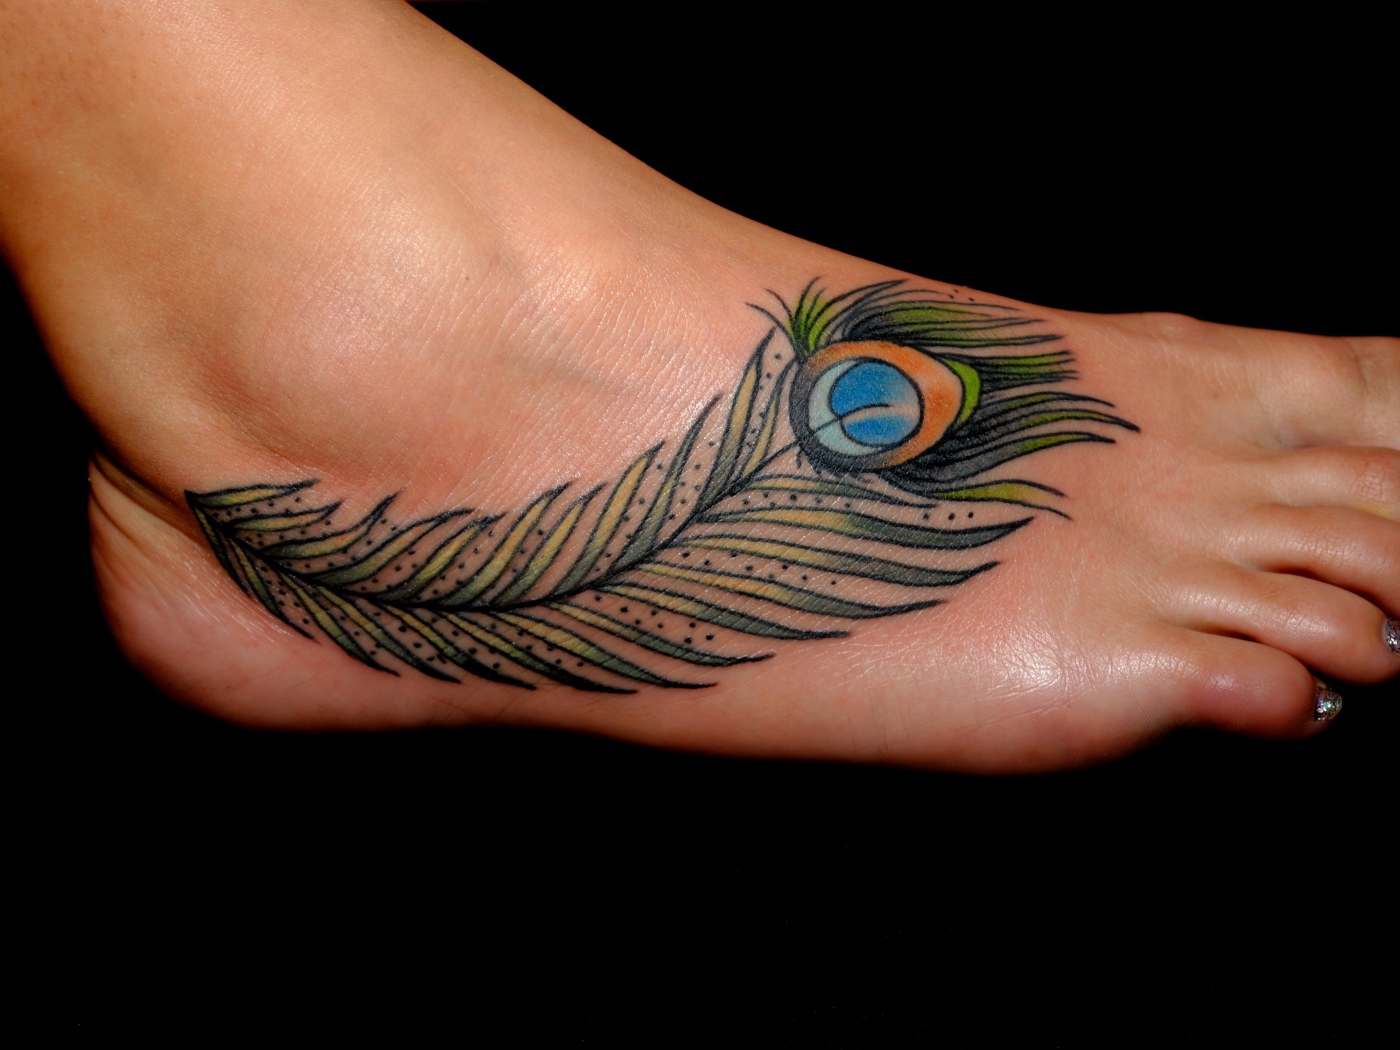 Peacock feather tattoo on leg on black background